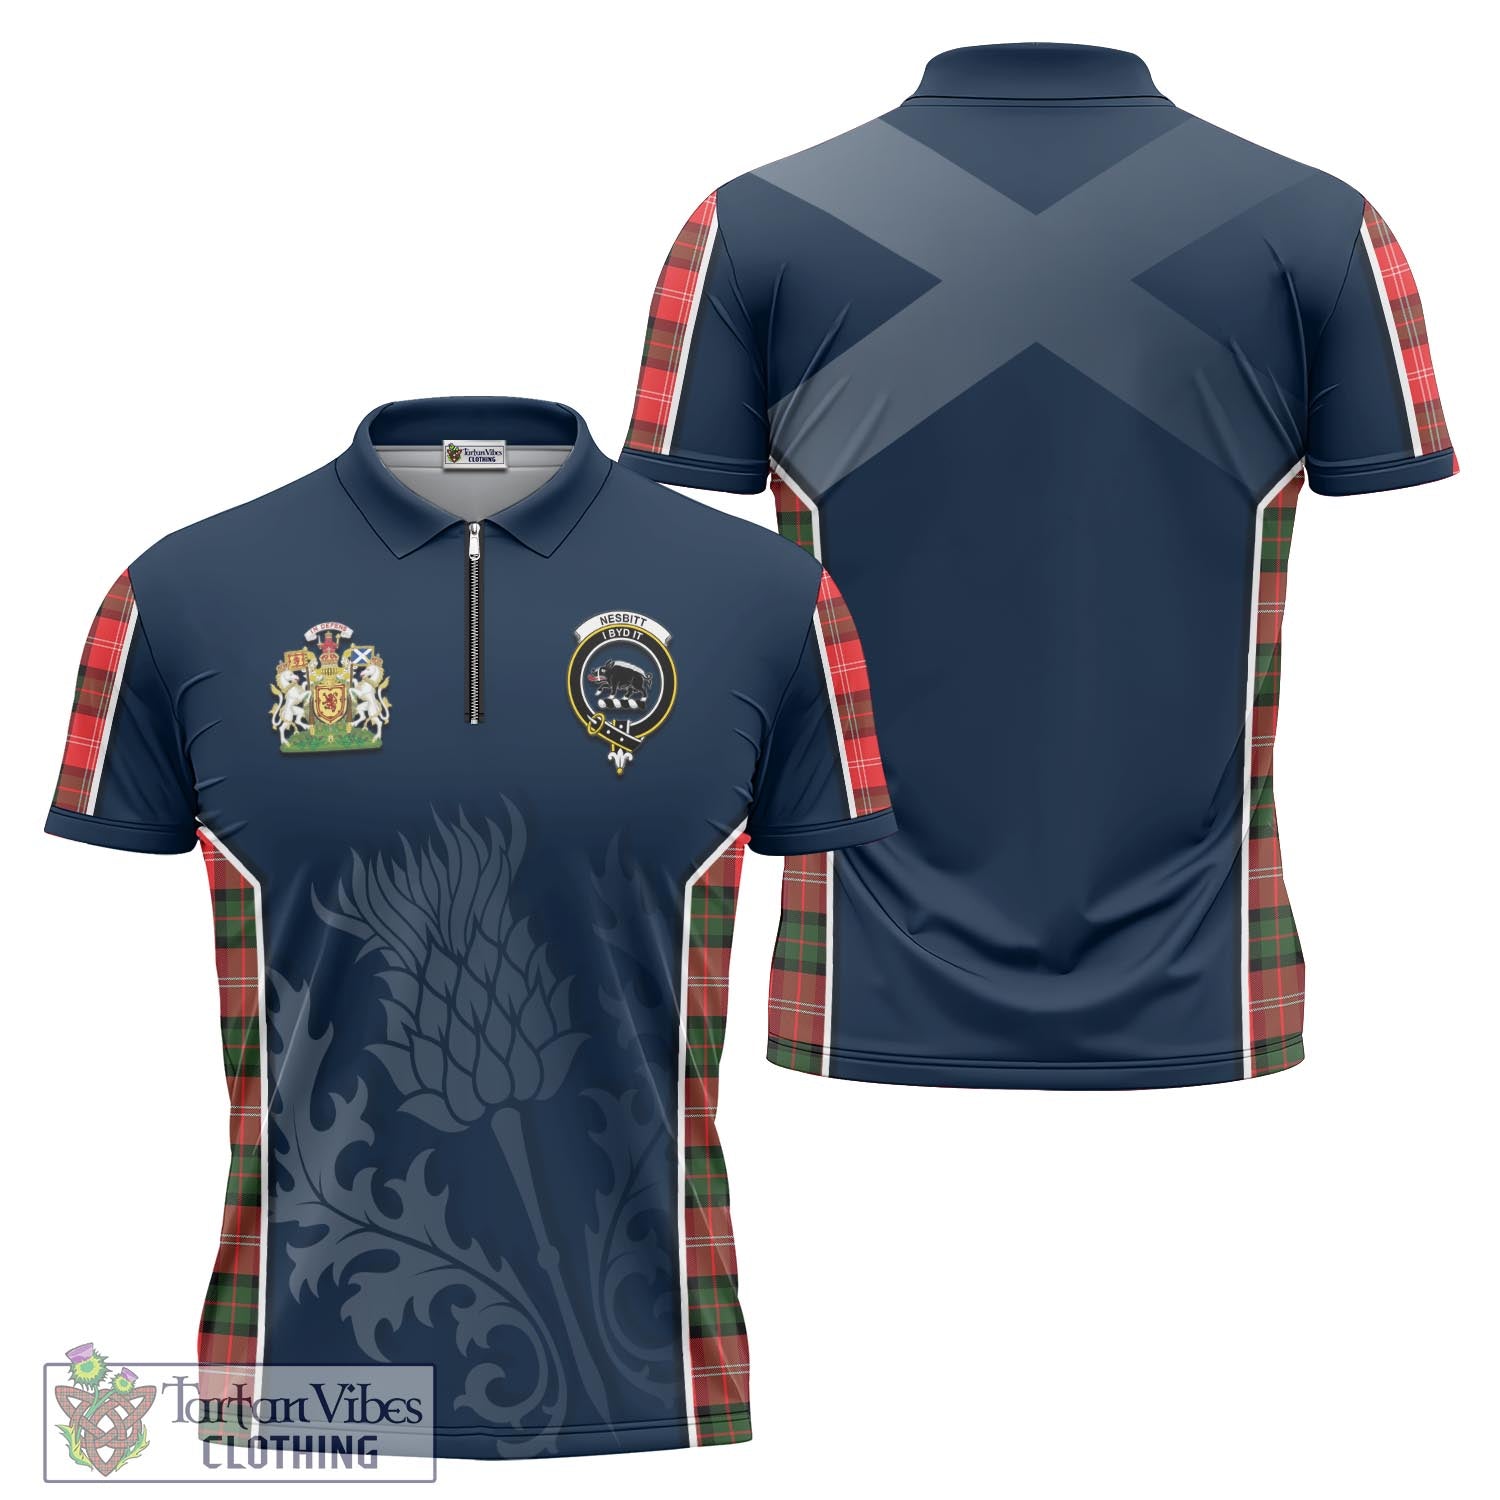 Tartan Vibes Clothing Nesbitt Modern Tartan Zipper Polo Shirt with Family Crest and Scottish Thistle Vibes Sport Style